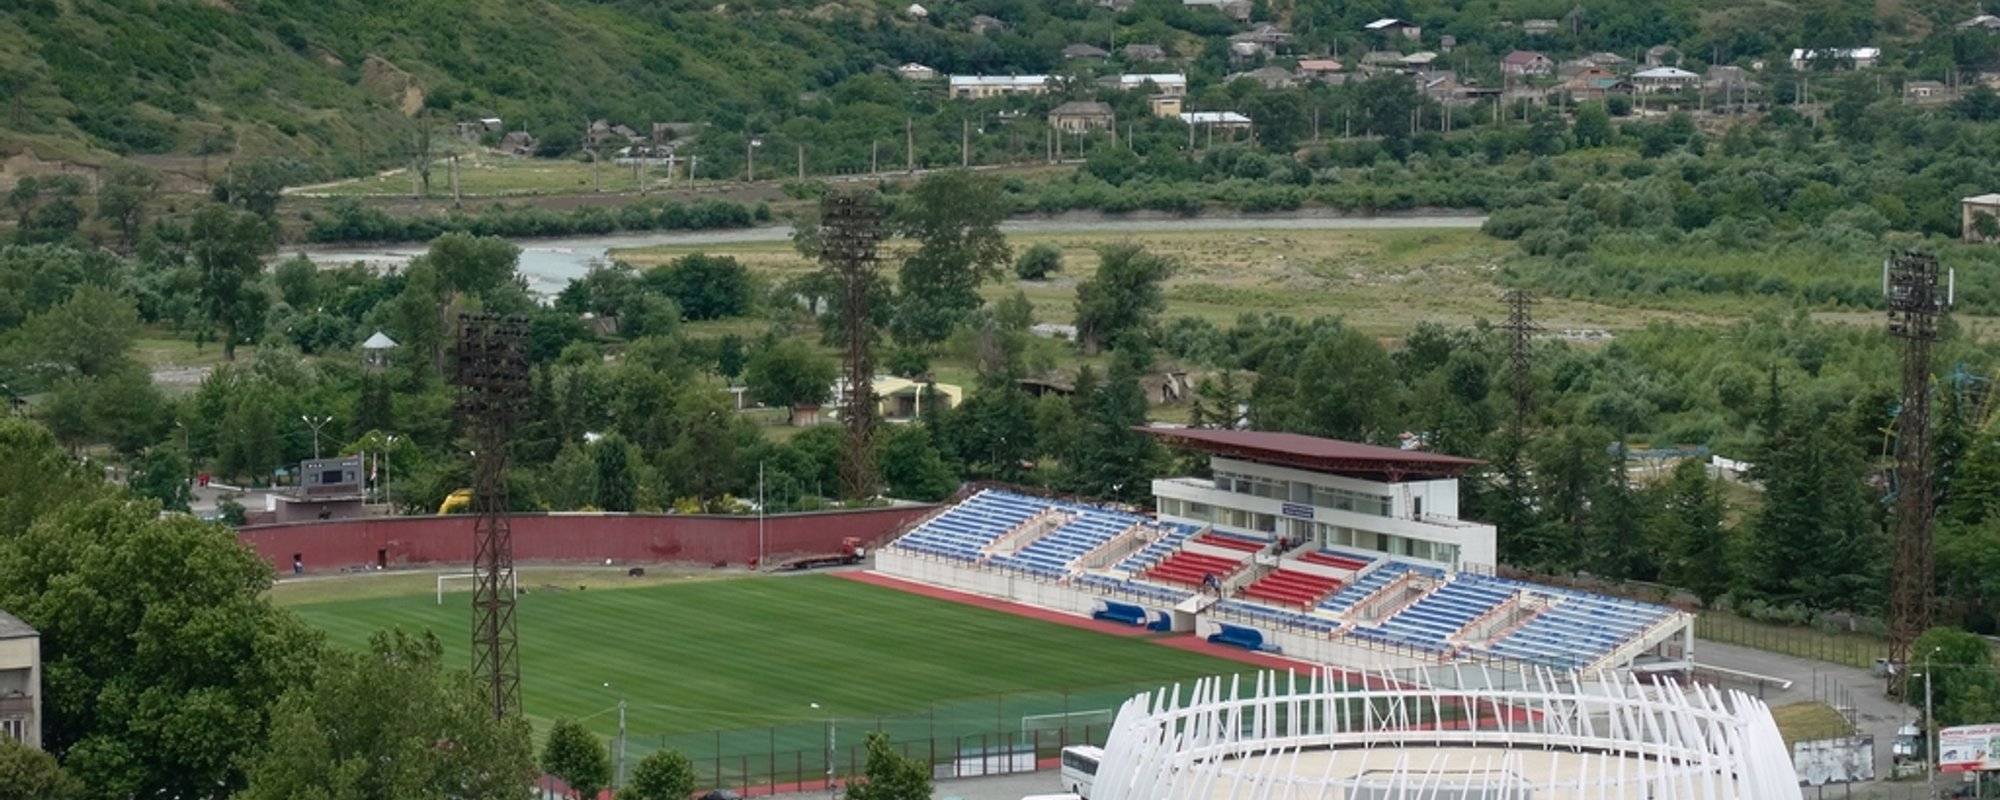 Stadiums of Georgia (1/?) - Tengiz Burjanadze Stadium in Gori, 7.7.2015